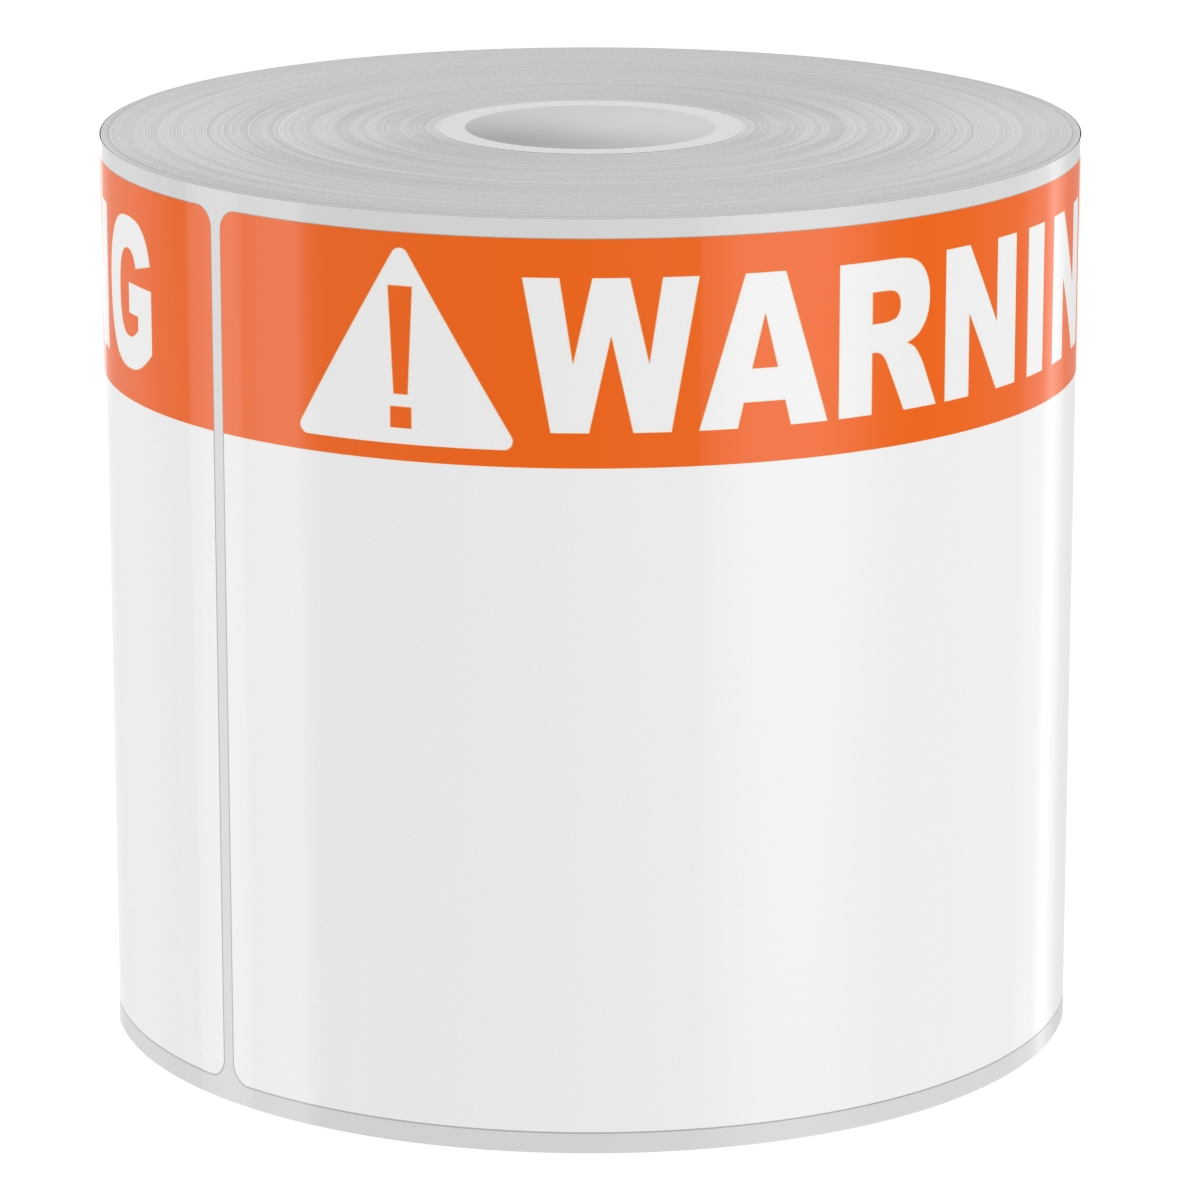 Detail view for 250 4" x 6" Arc Flash Labels White Warning on Orange Header